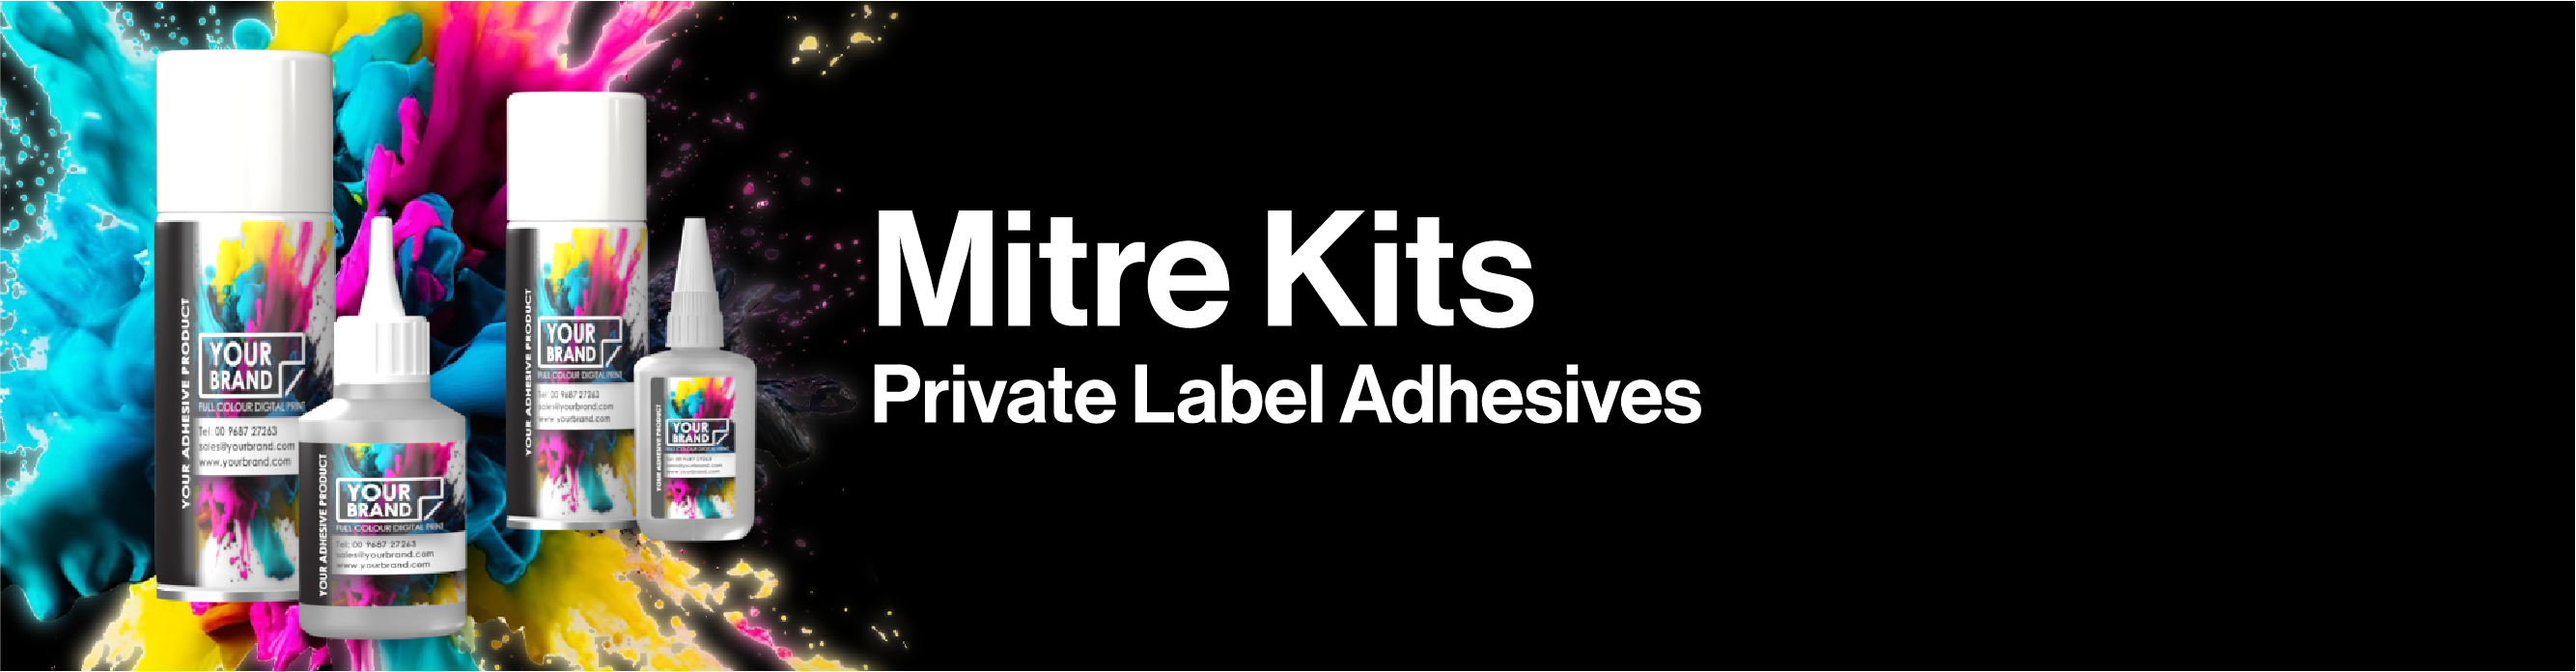 Private Label Mitre Kits Banner